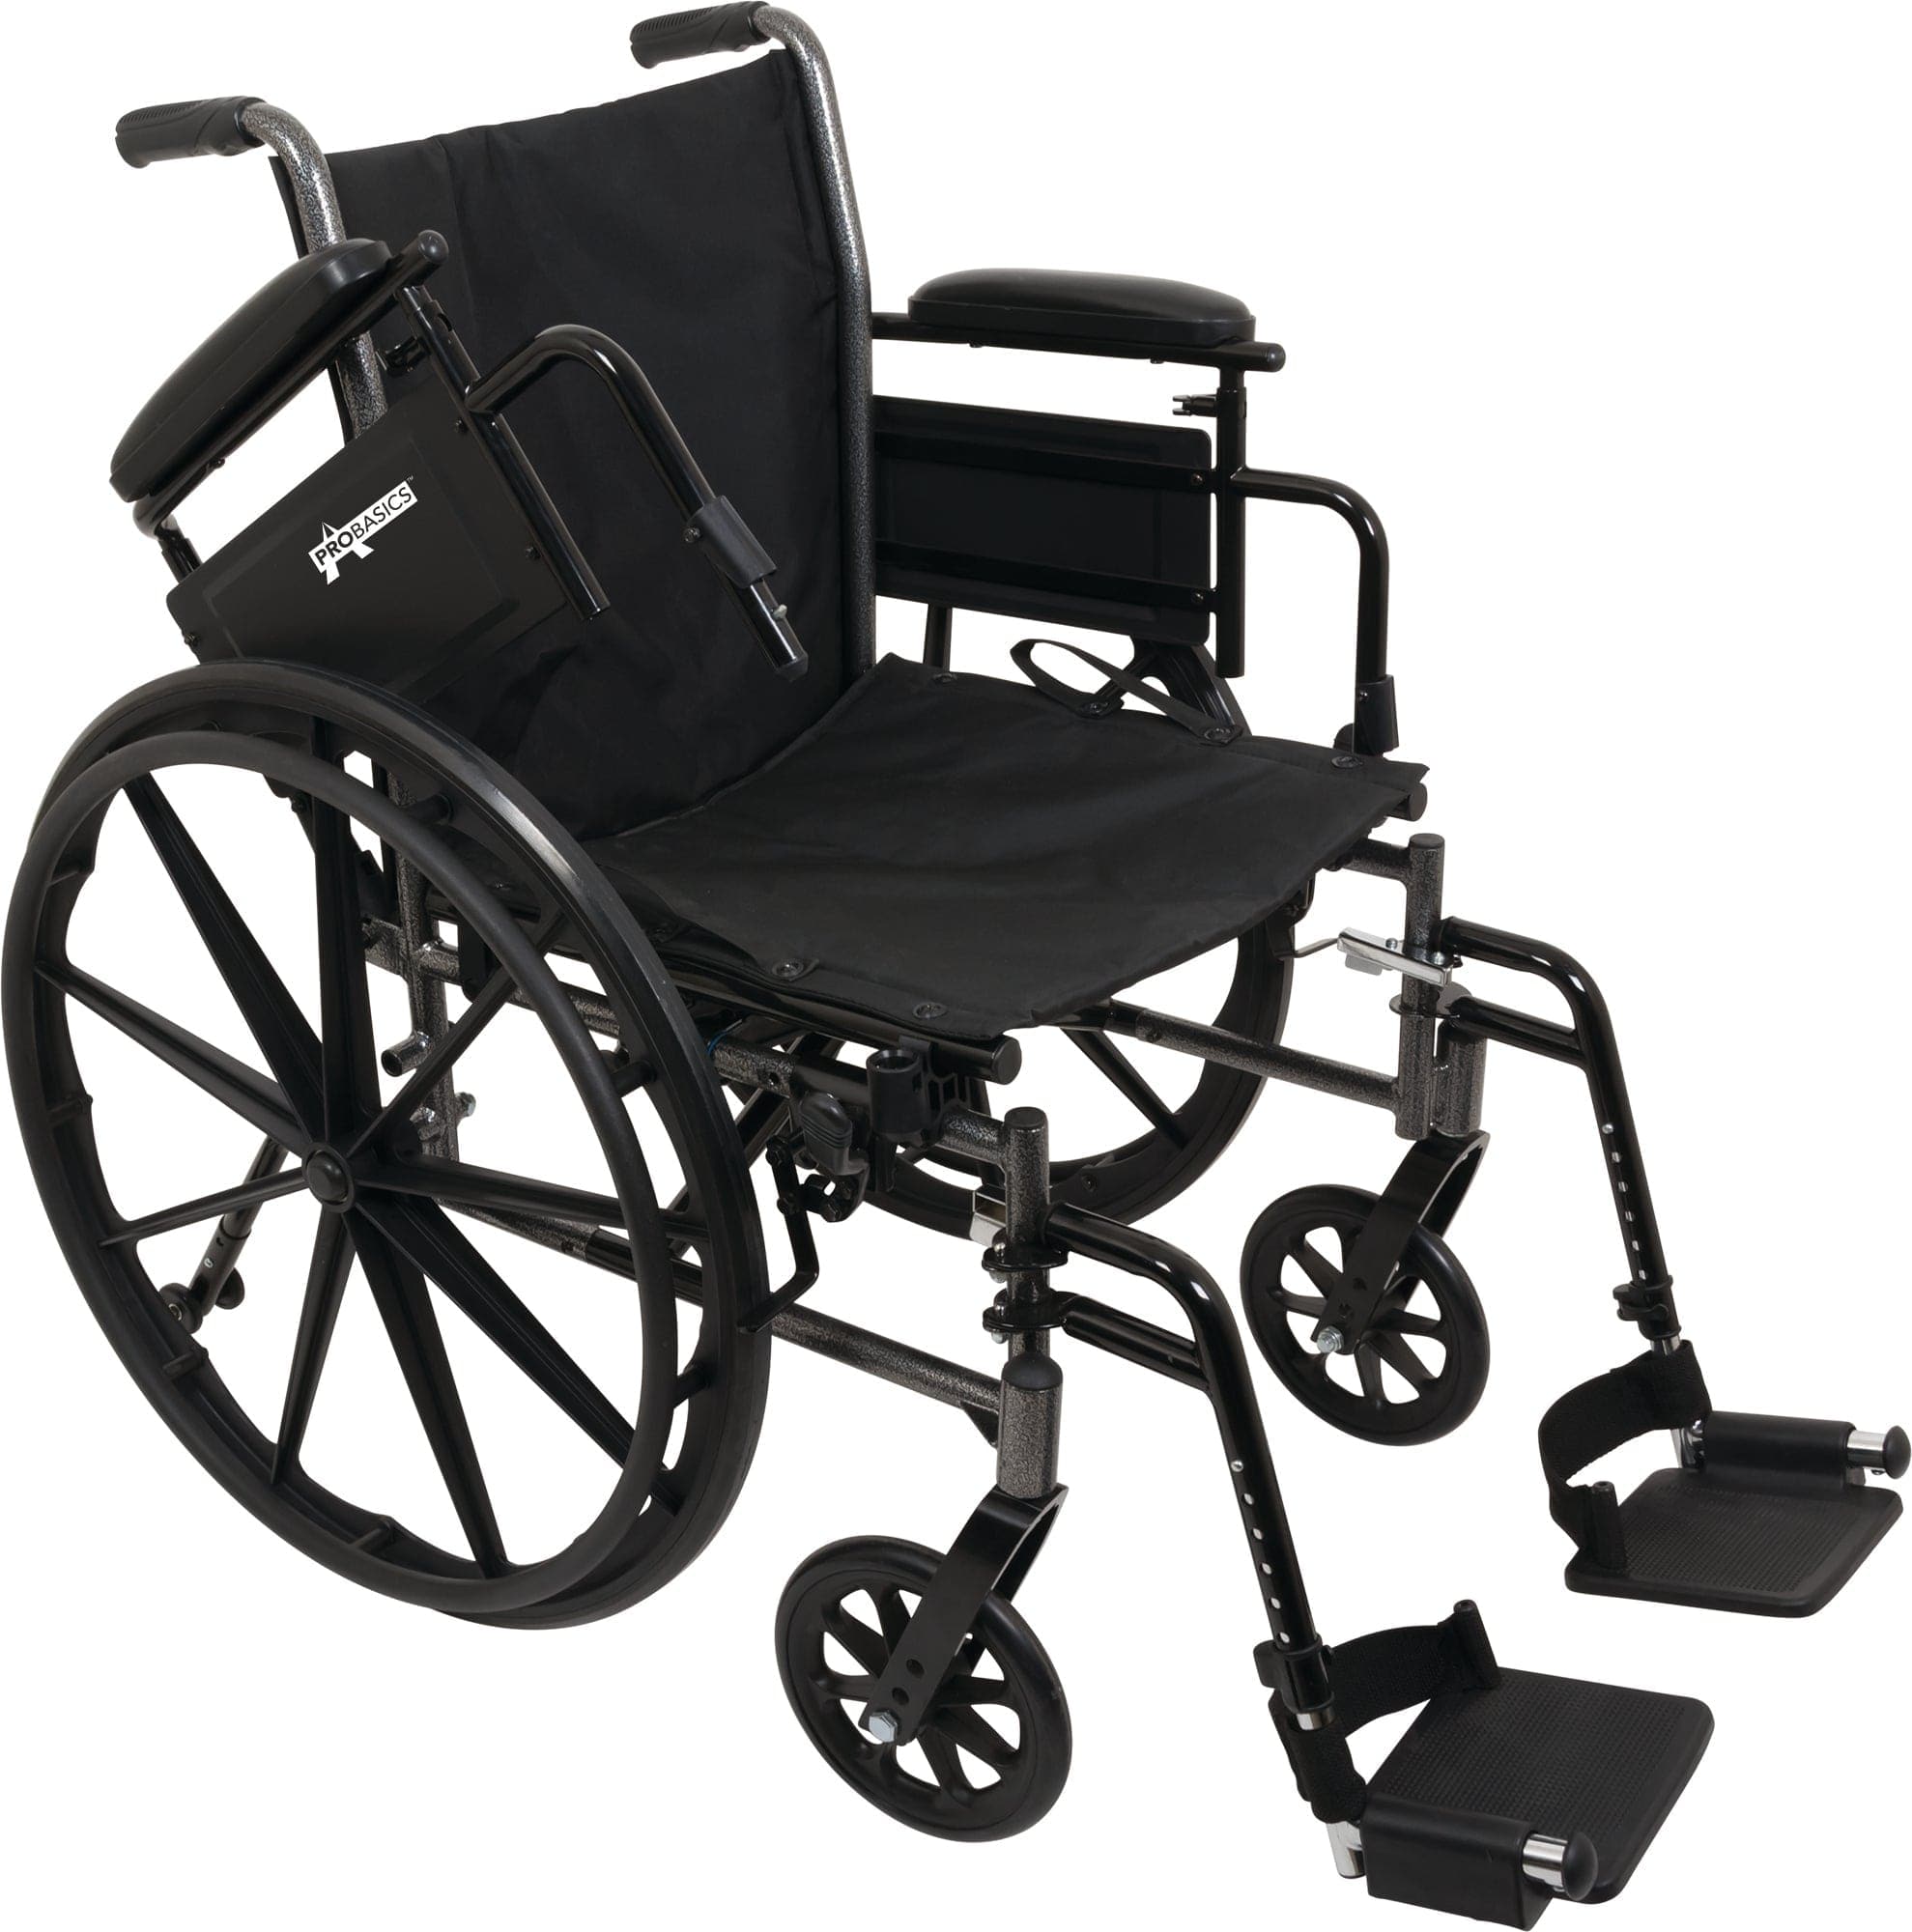 Compass Health K3 Wheelchairs Compass Health ProBasics K3 Lightweight Wheelchair with 18" x 16" Seat,